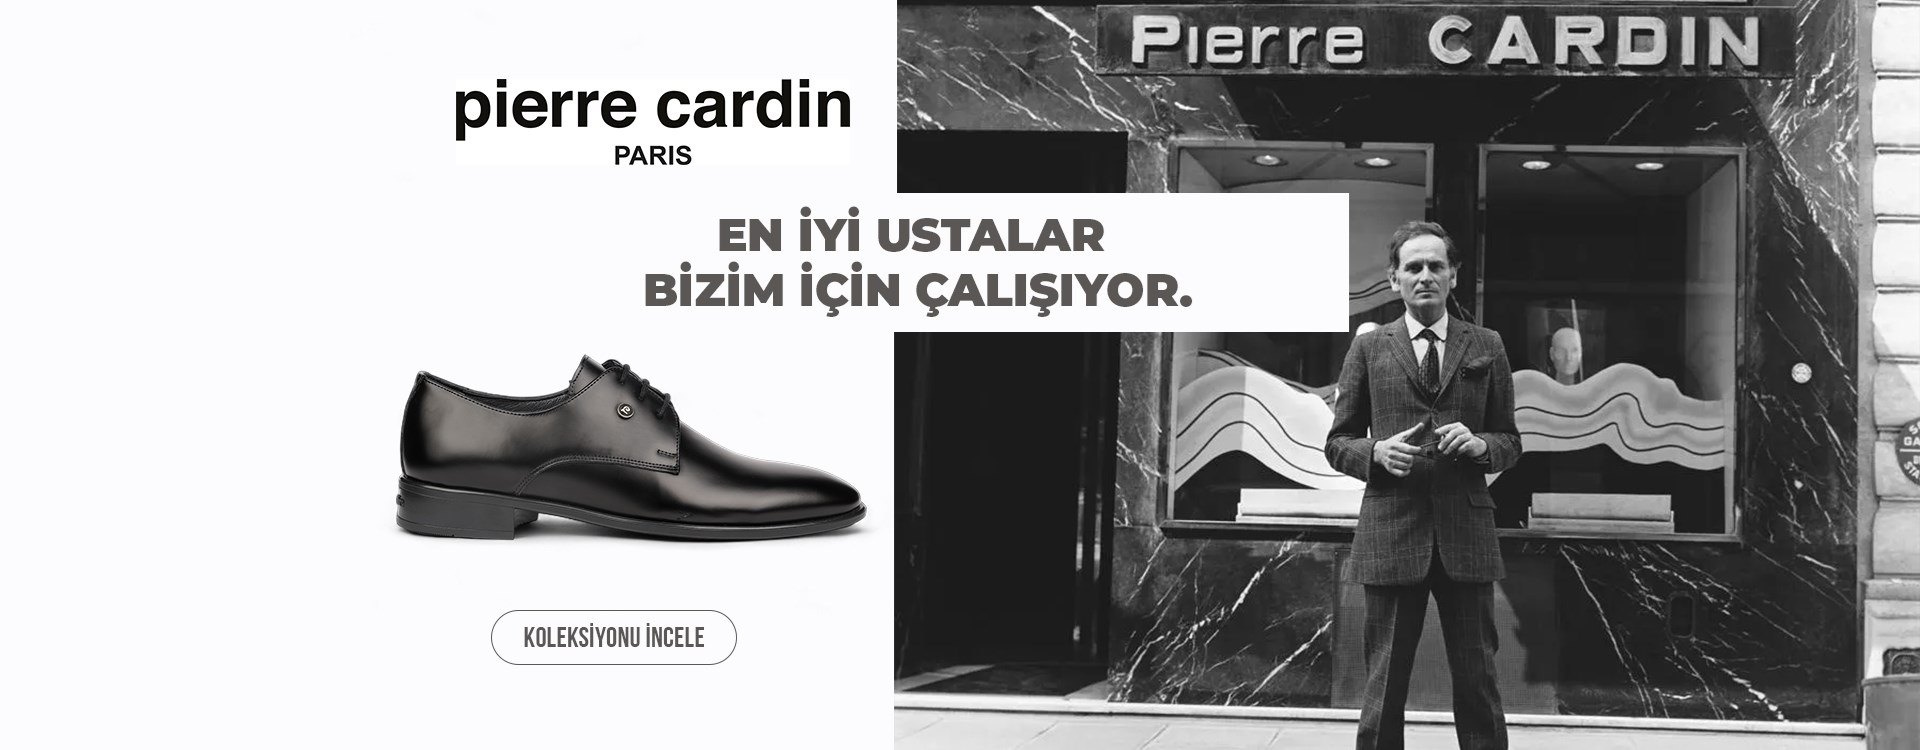 Siltab Pierre Cardin